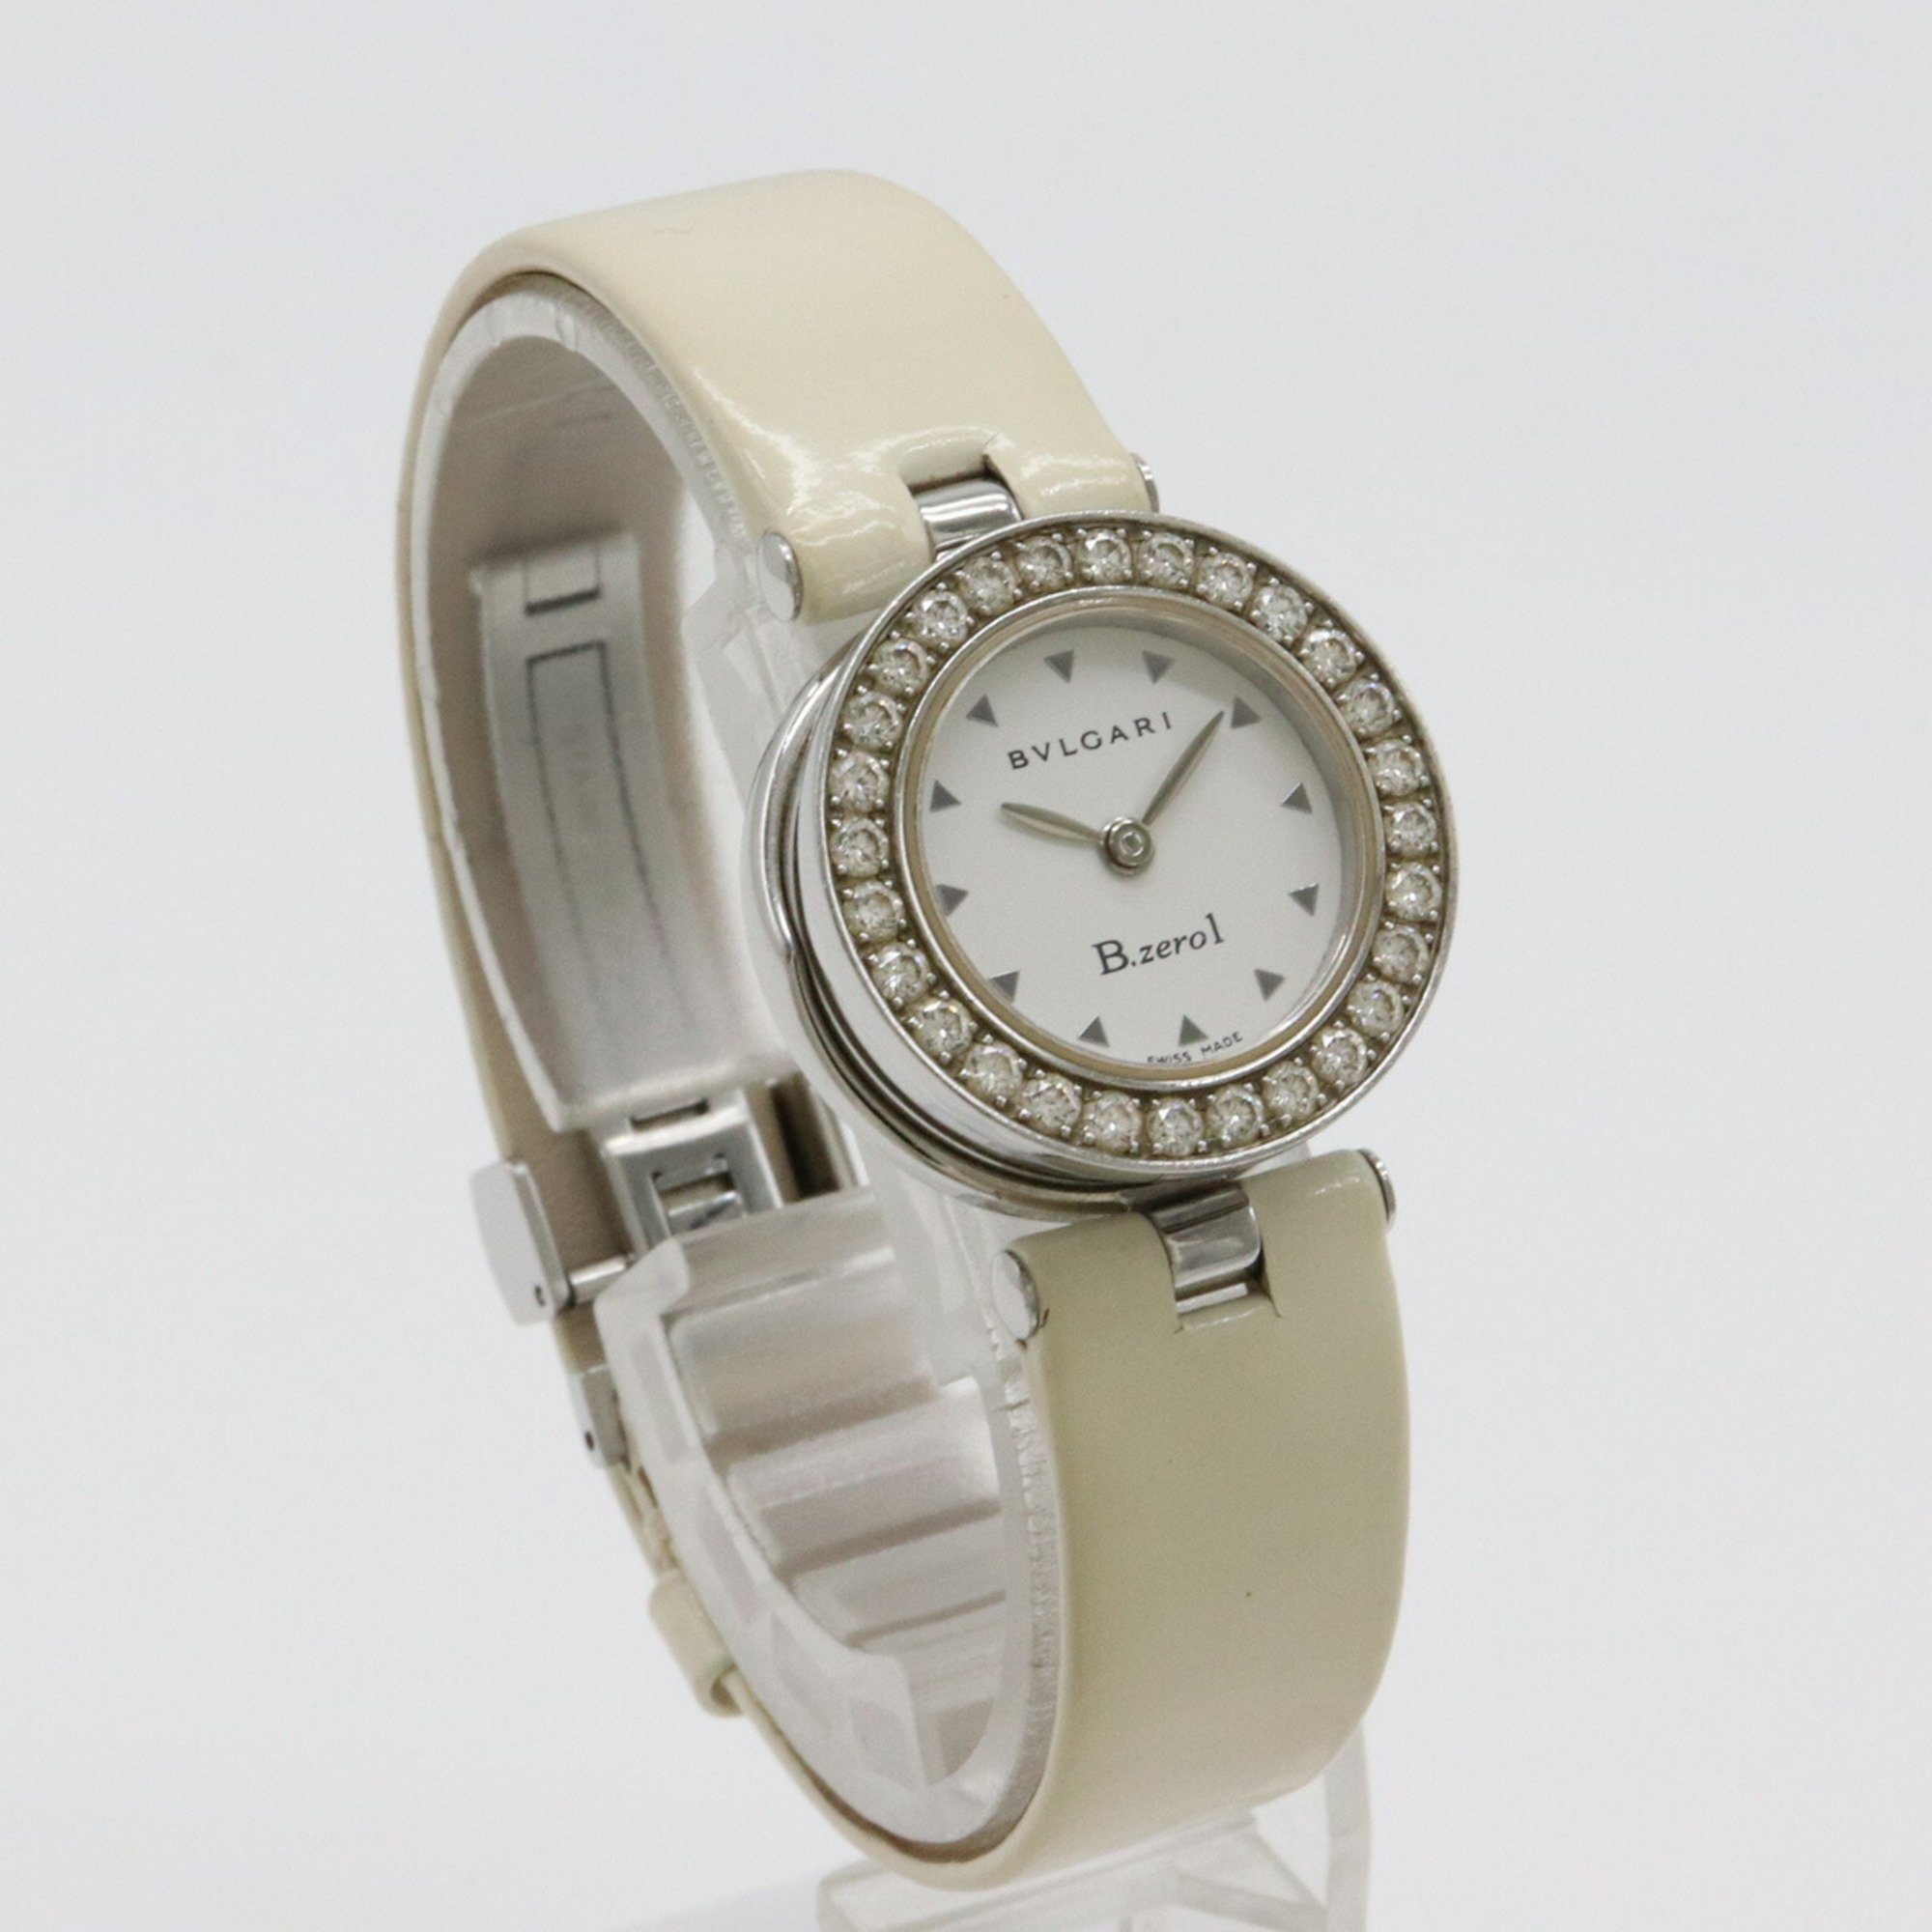 BVLGARI B.zero1 B-zero1 Diamond Bezel White Dial Enamel Leather Belt Women's Quartz Watch BZ22WSDL